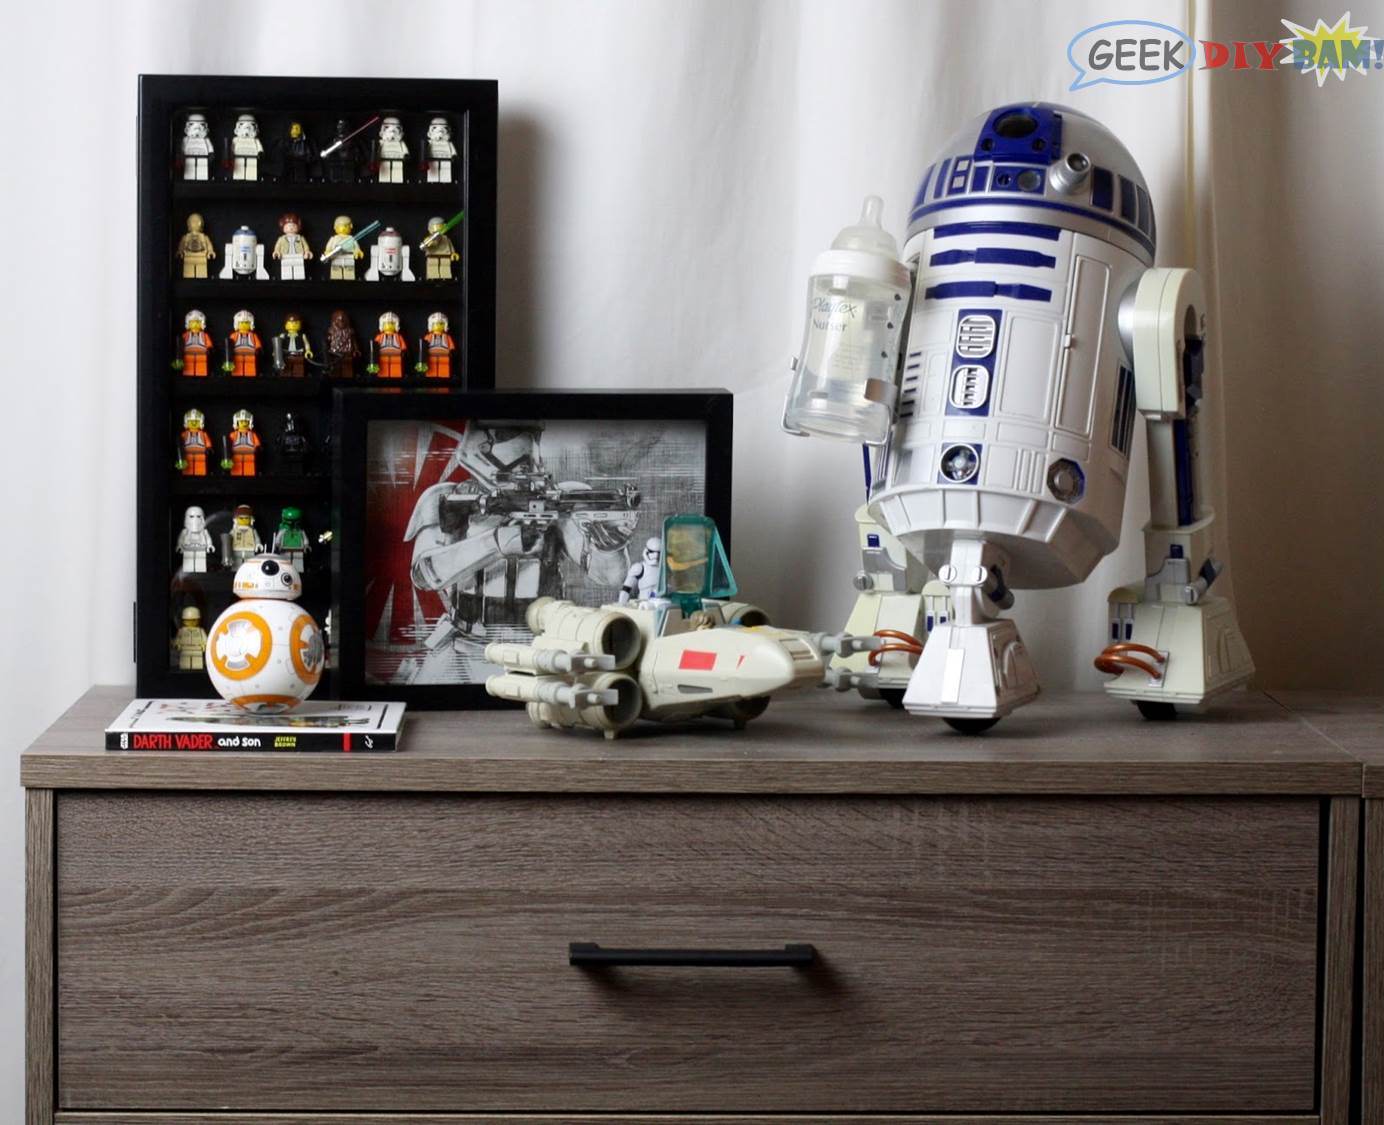 Geek Diy Bam Star Wars Theme Baby Nursery Display Diy